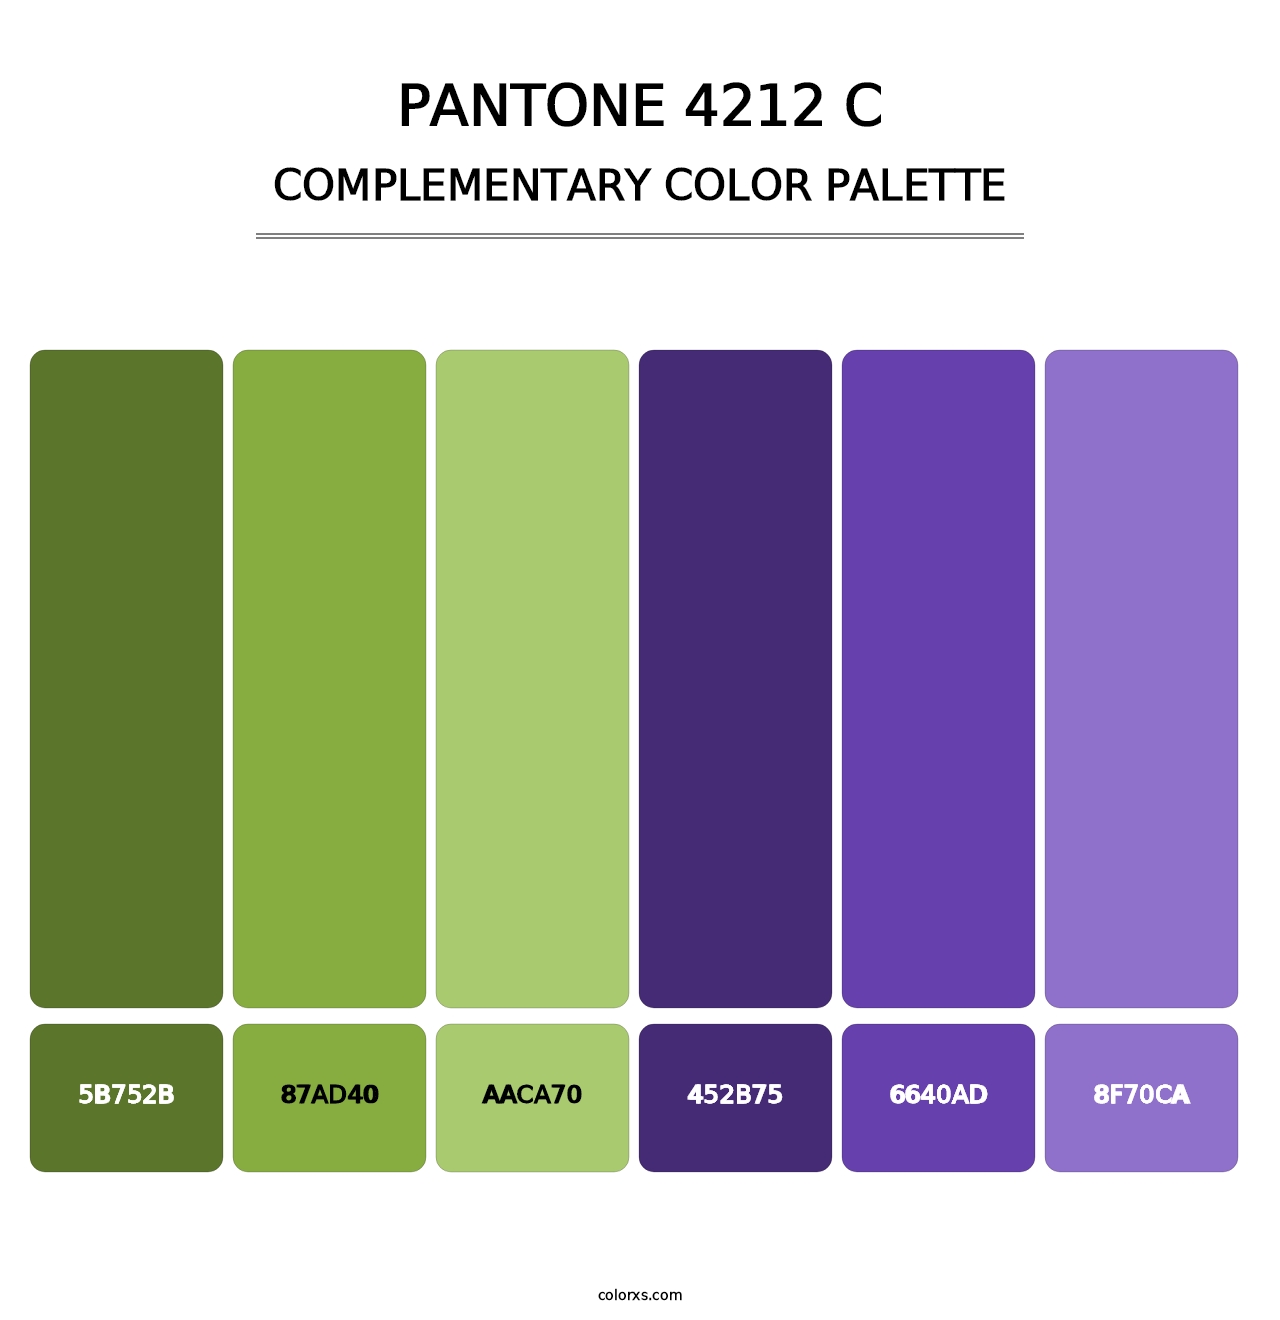 PANTONE 4212 C - Complementary Color Palette